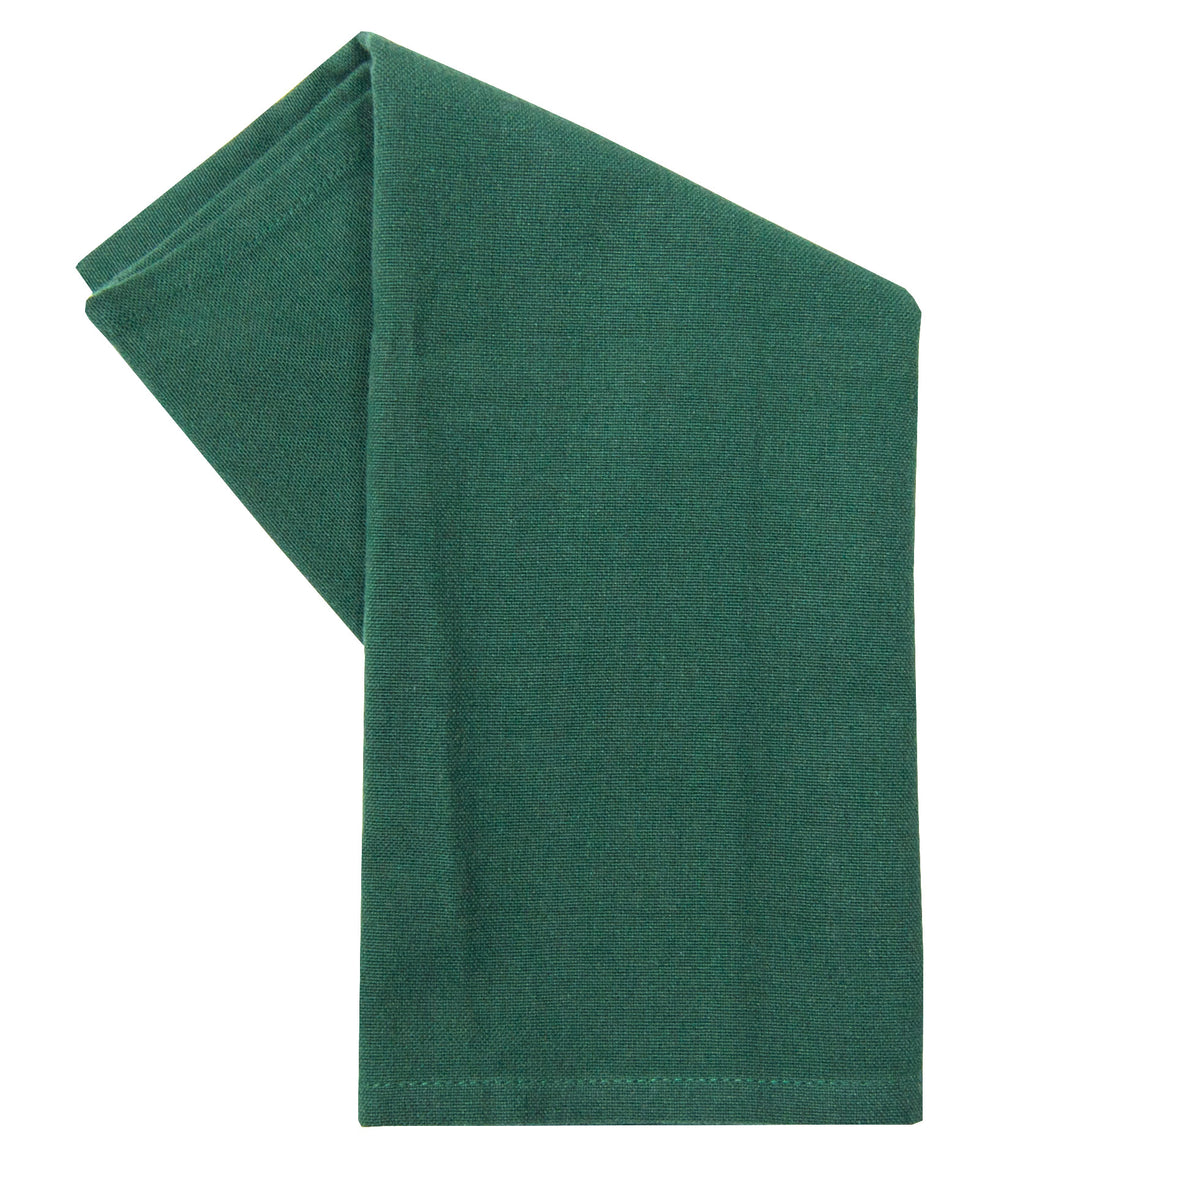 Tea Towel - Dunroven House Plain Weave Solid